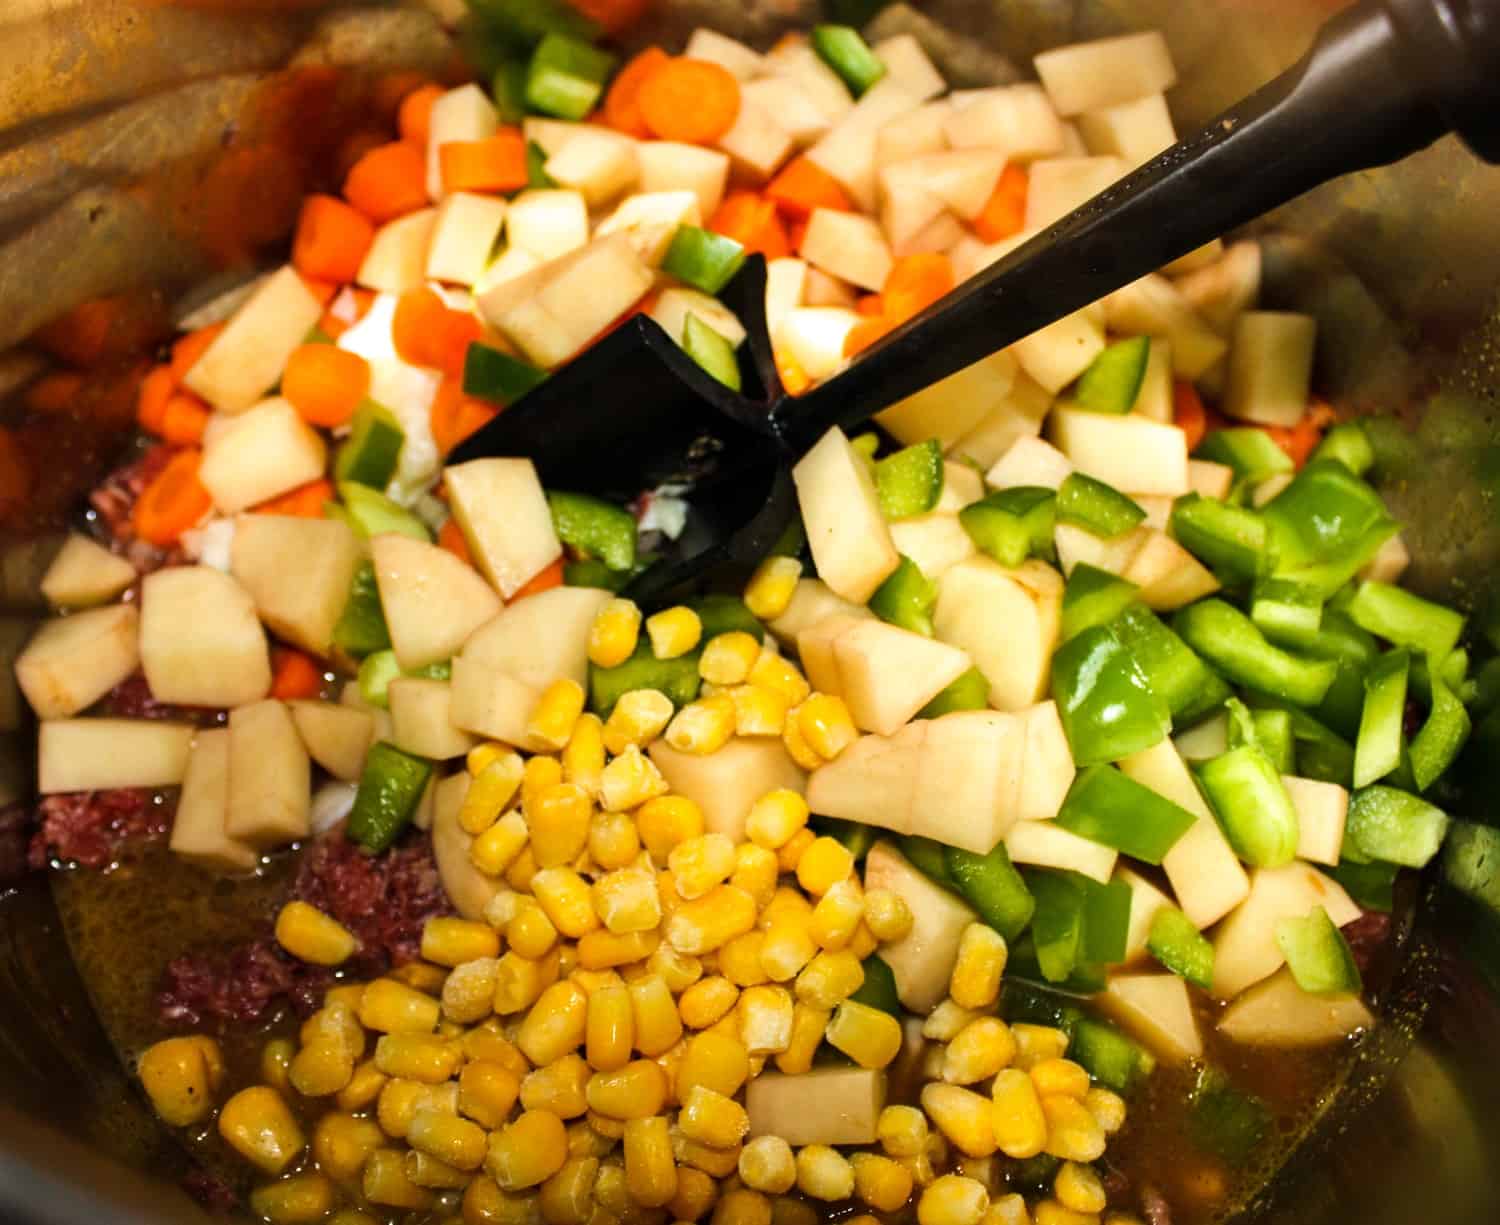 Adding the vegetables.